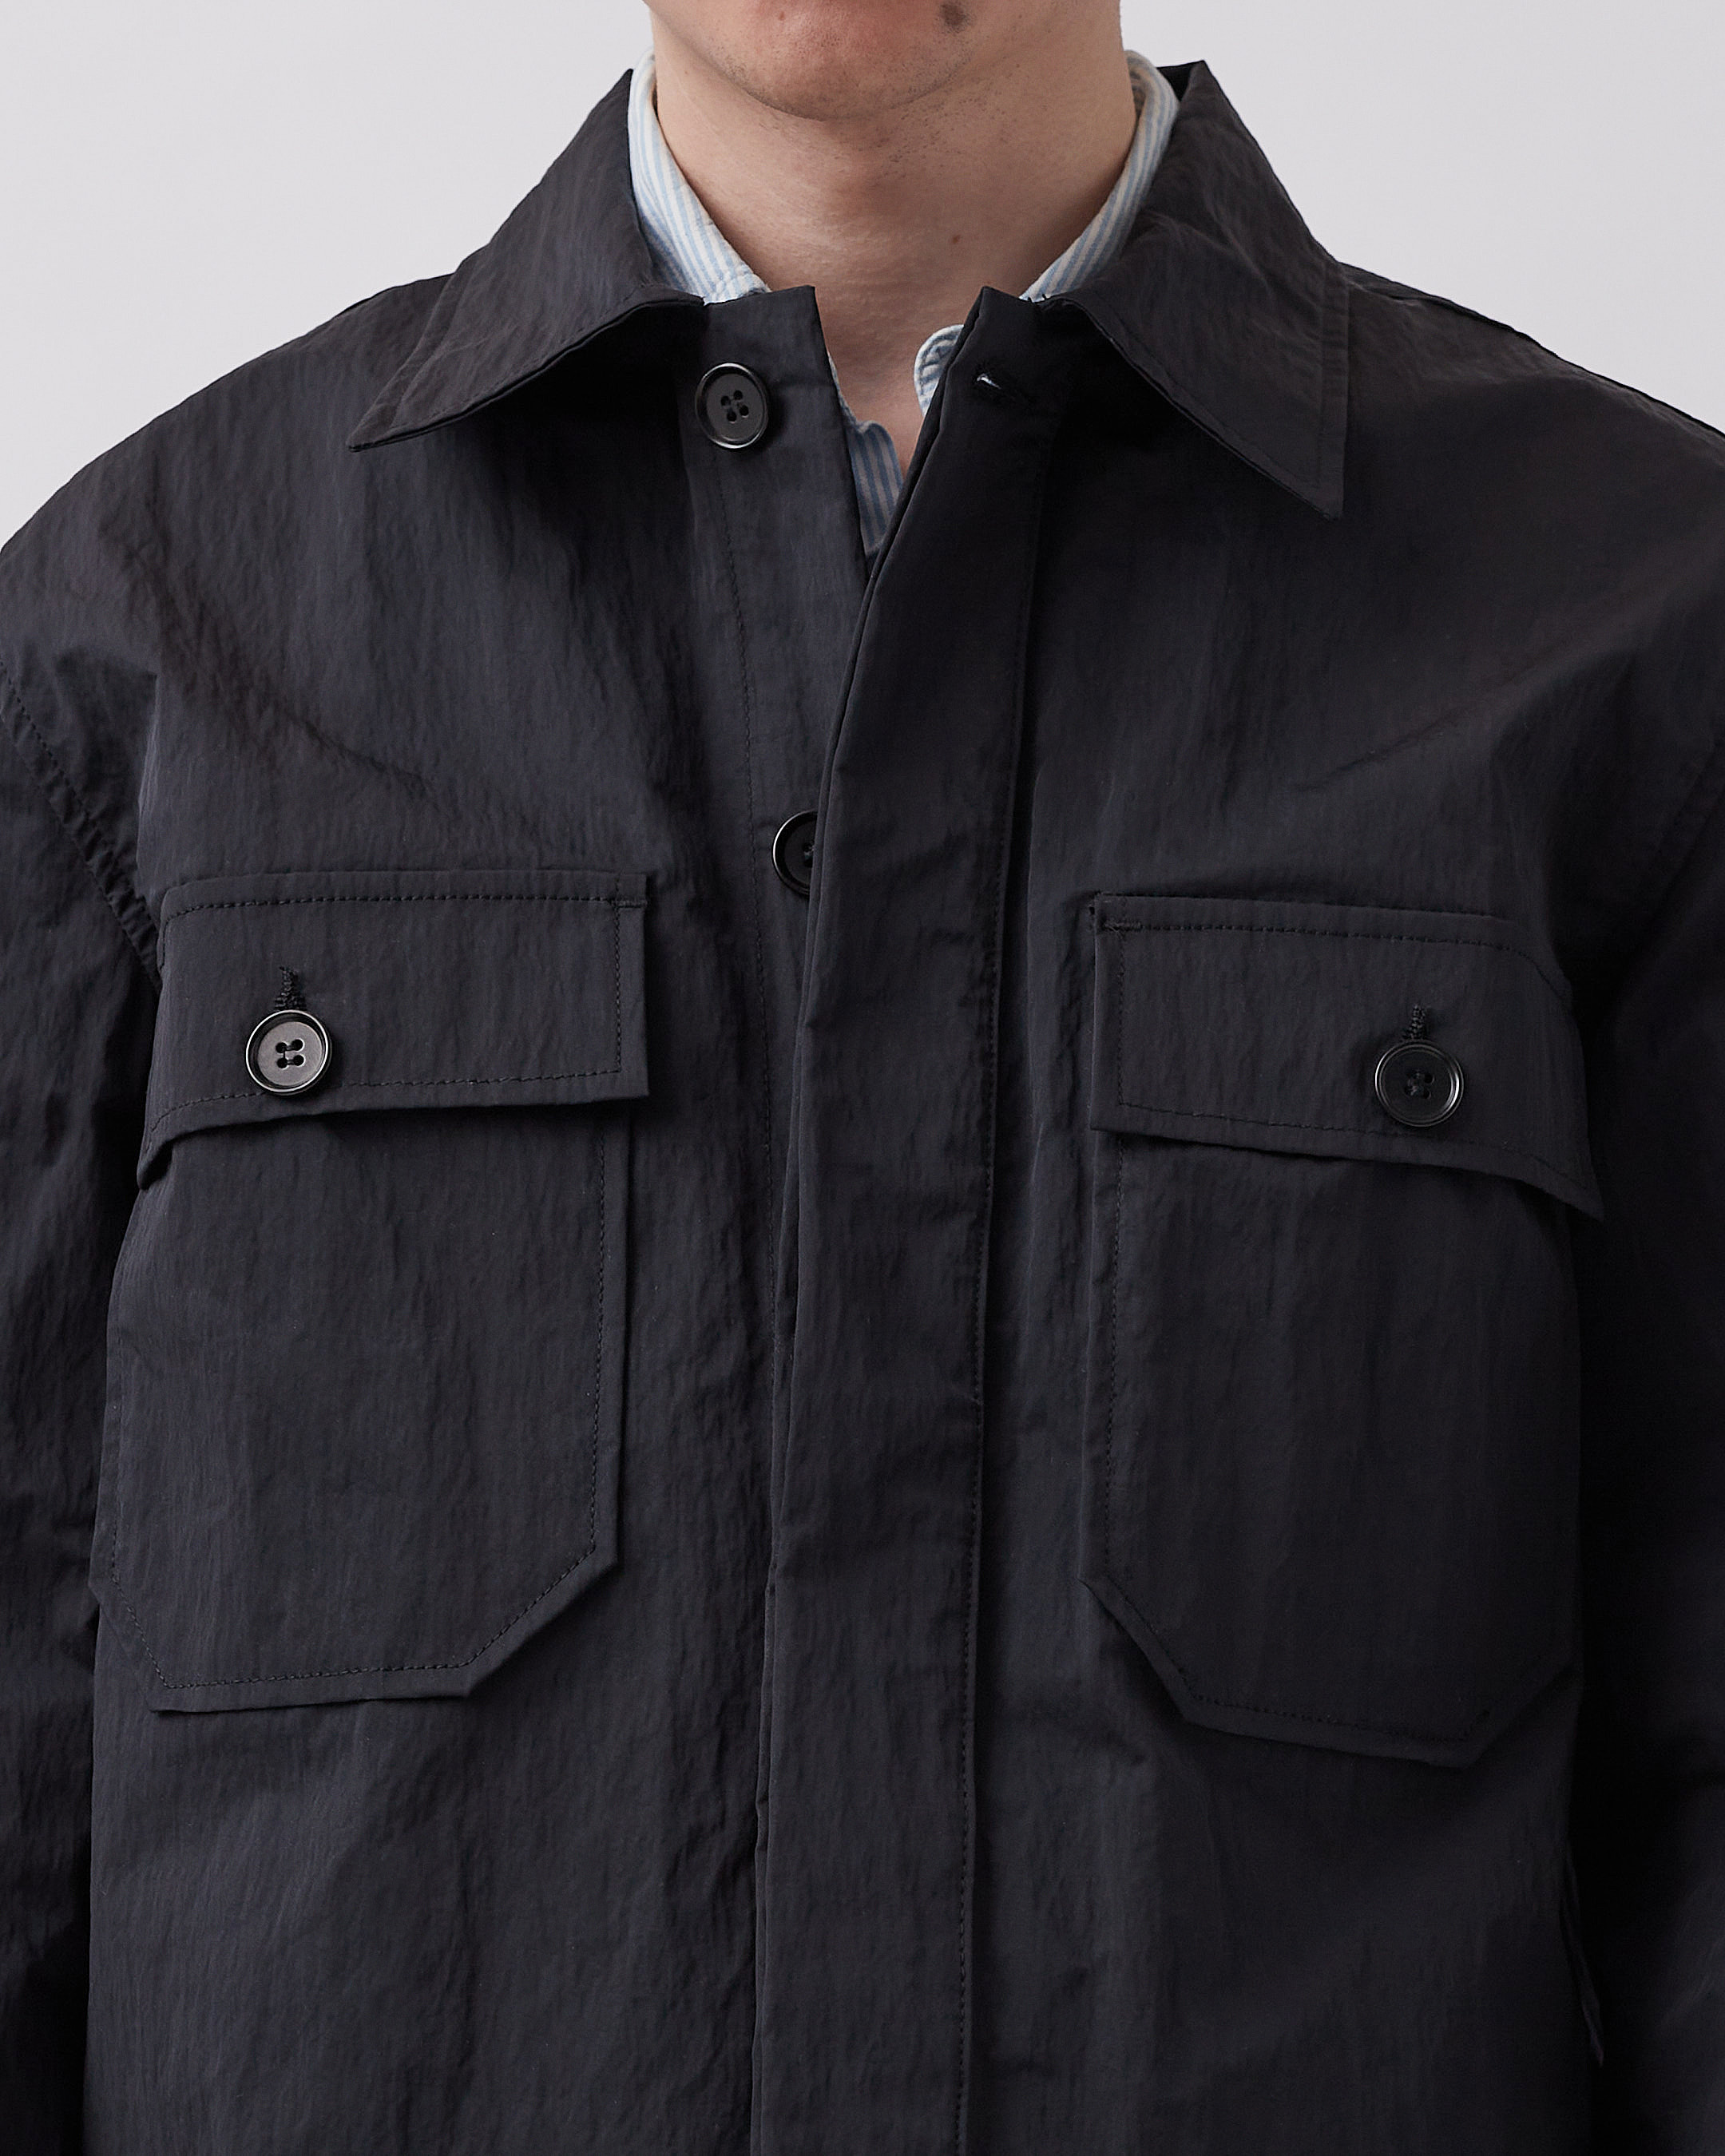 | Berner Shipping Store Norse Kühl - - Paint Shirt Black Worldwide